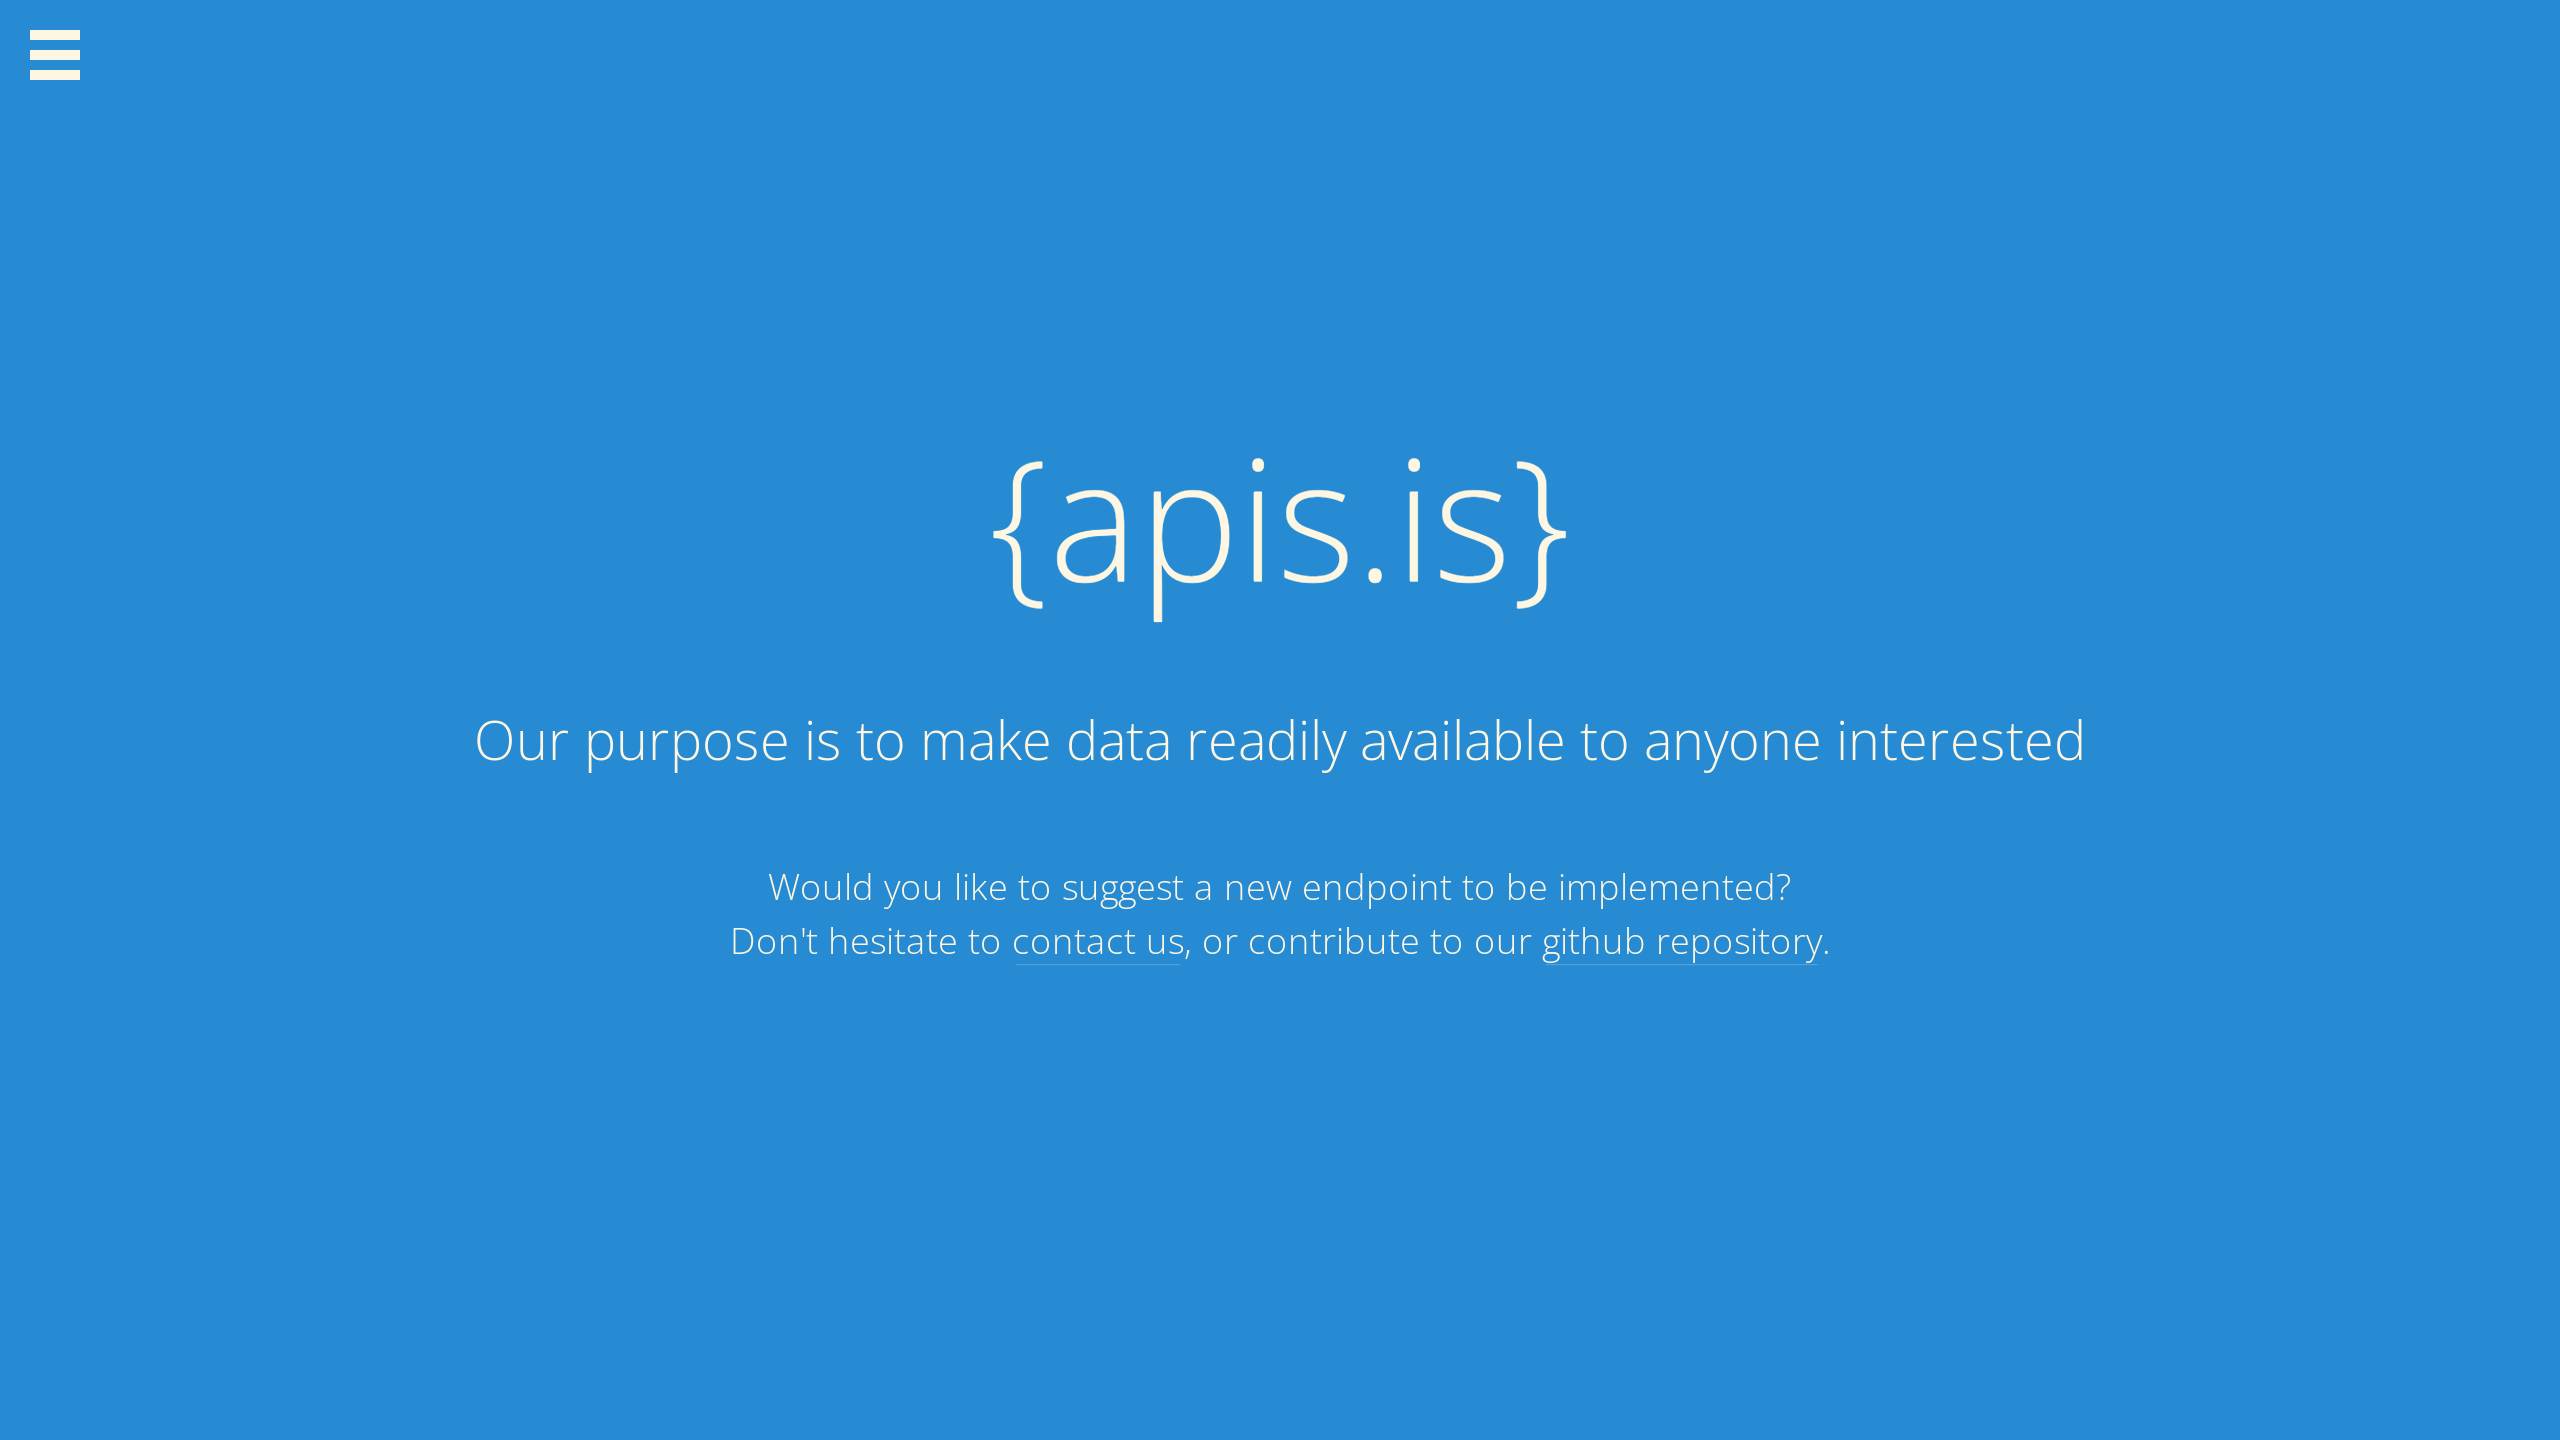 Icelandic APIs's website screenshot